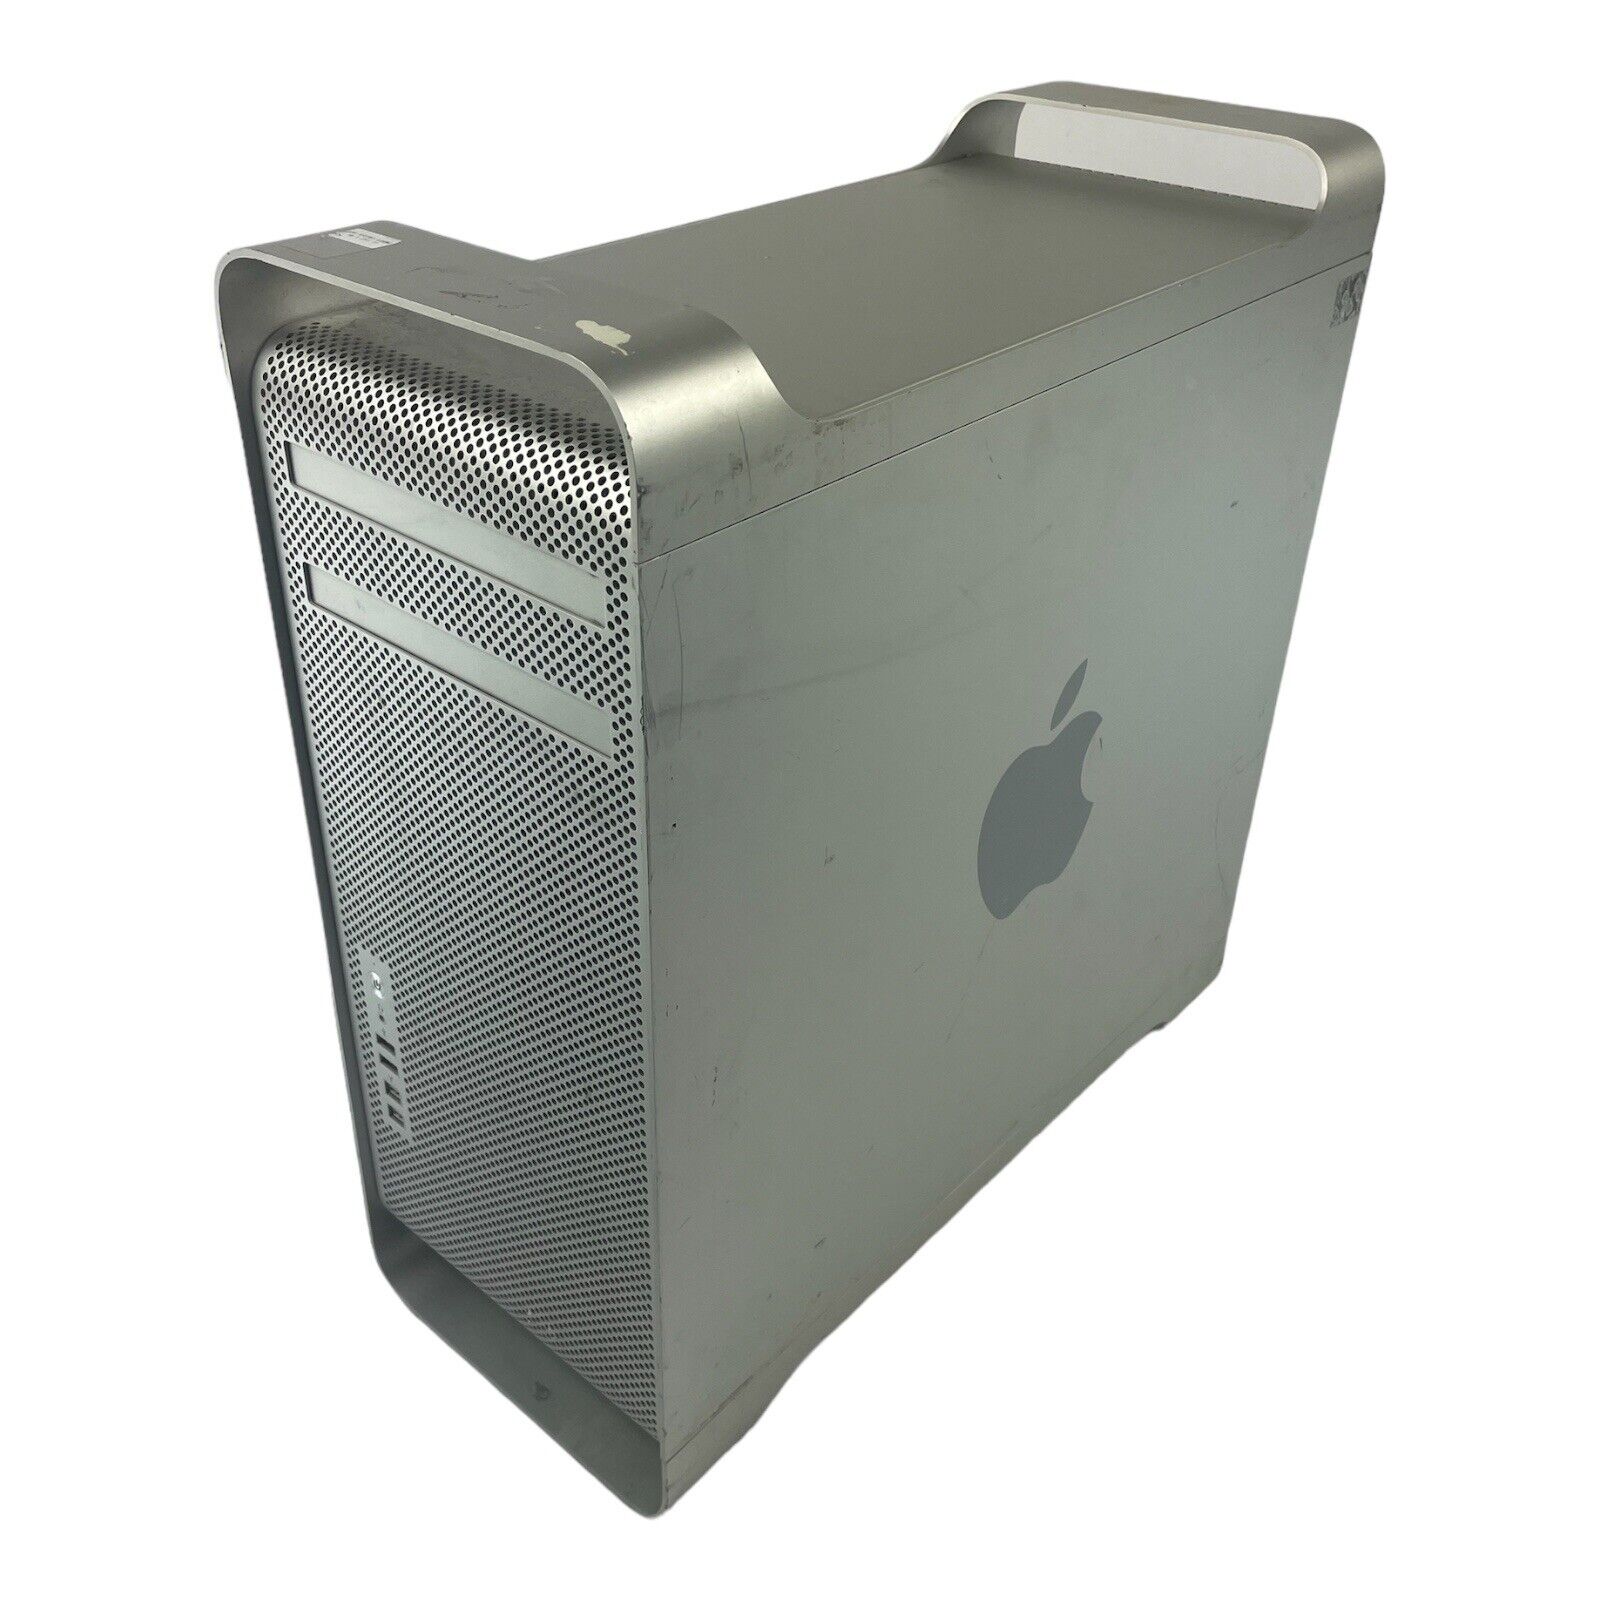 Apple MacPro A1289 EMC 2314-2 3.46GHz Xeon 6-Core 16GB RAM 2 TB HDD